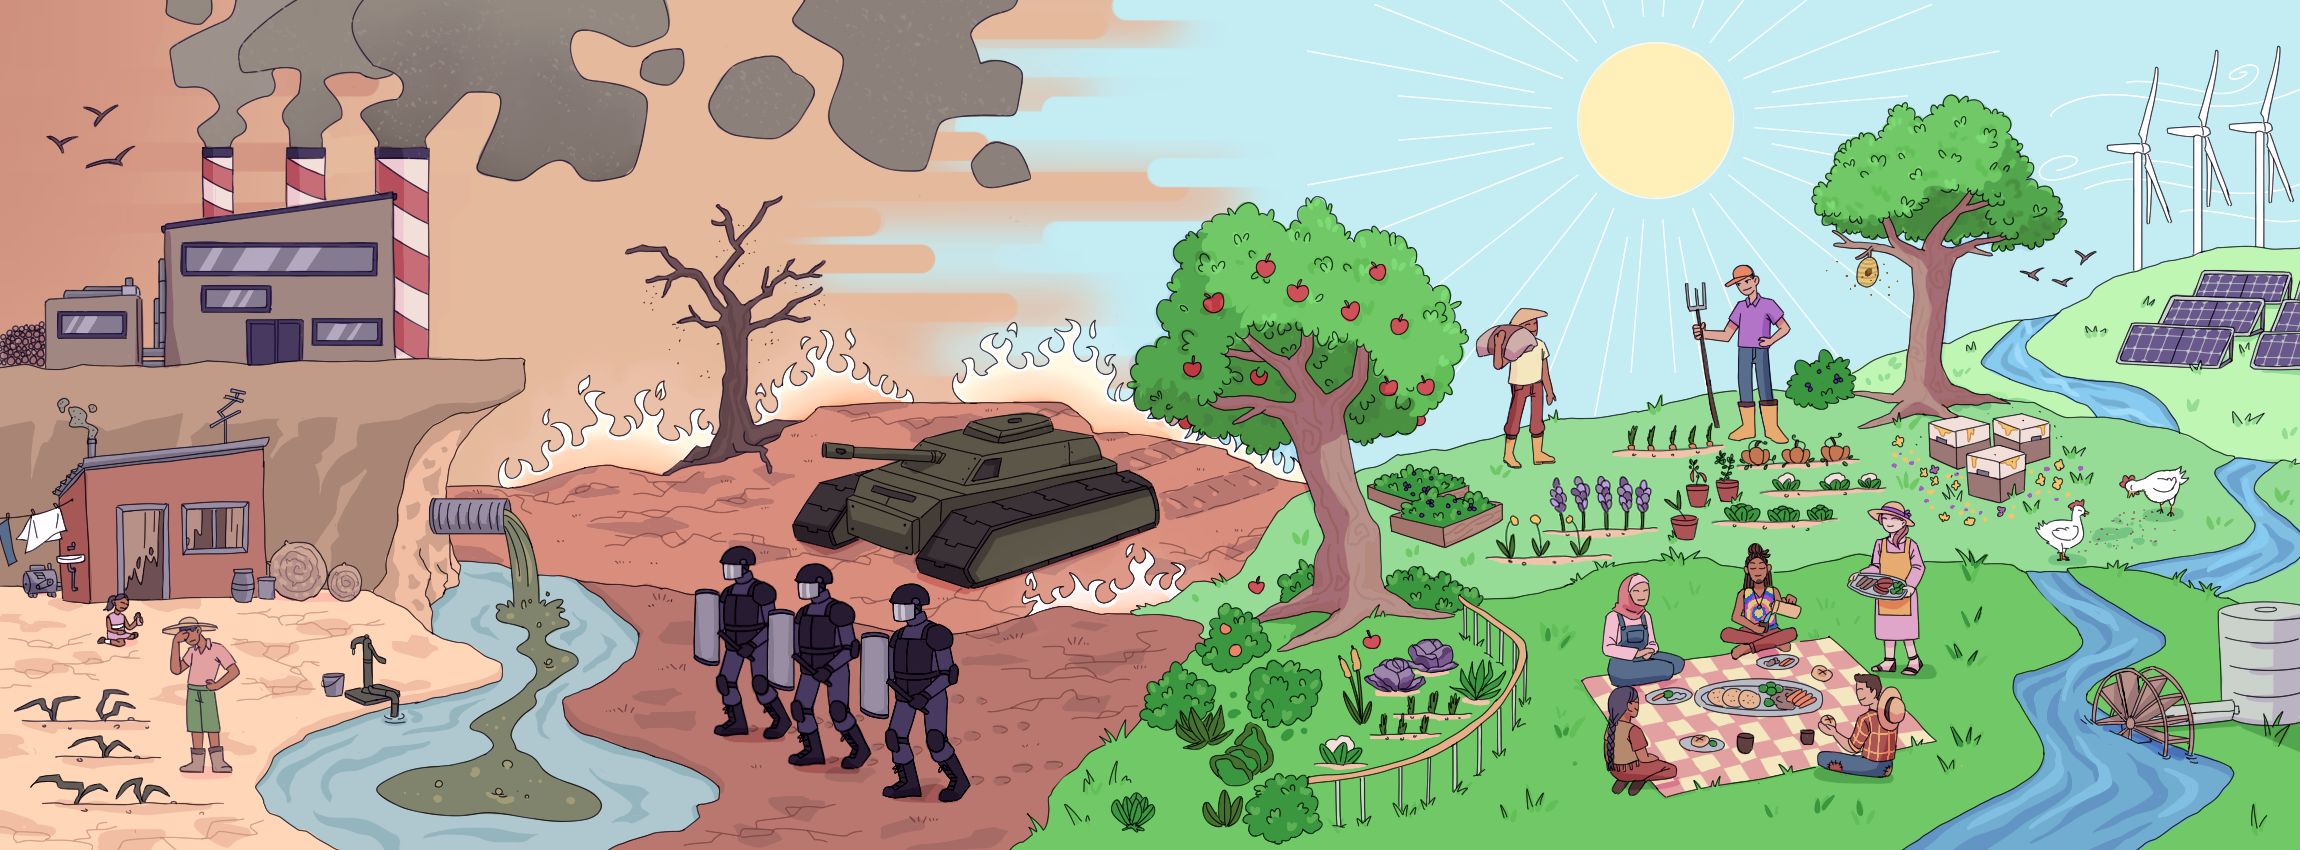 illustration depicting environmental dichotomies